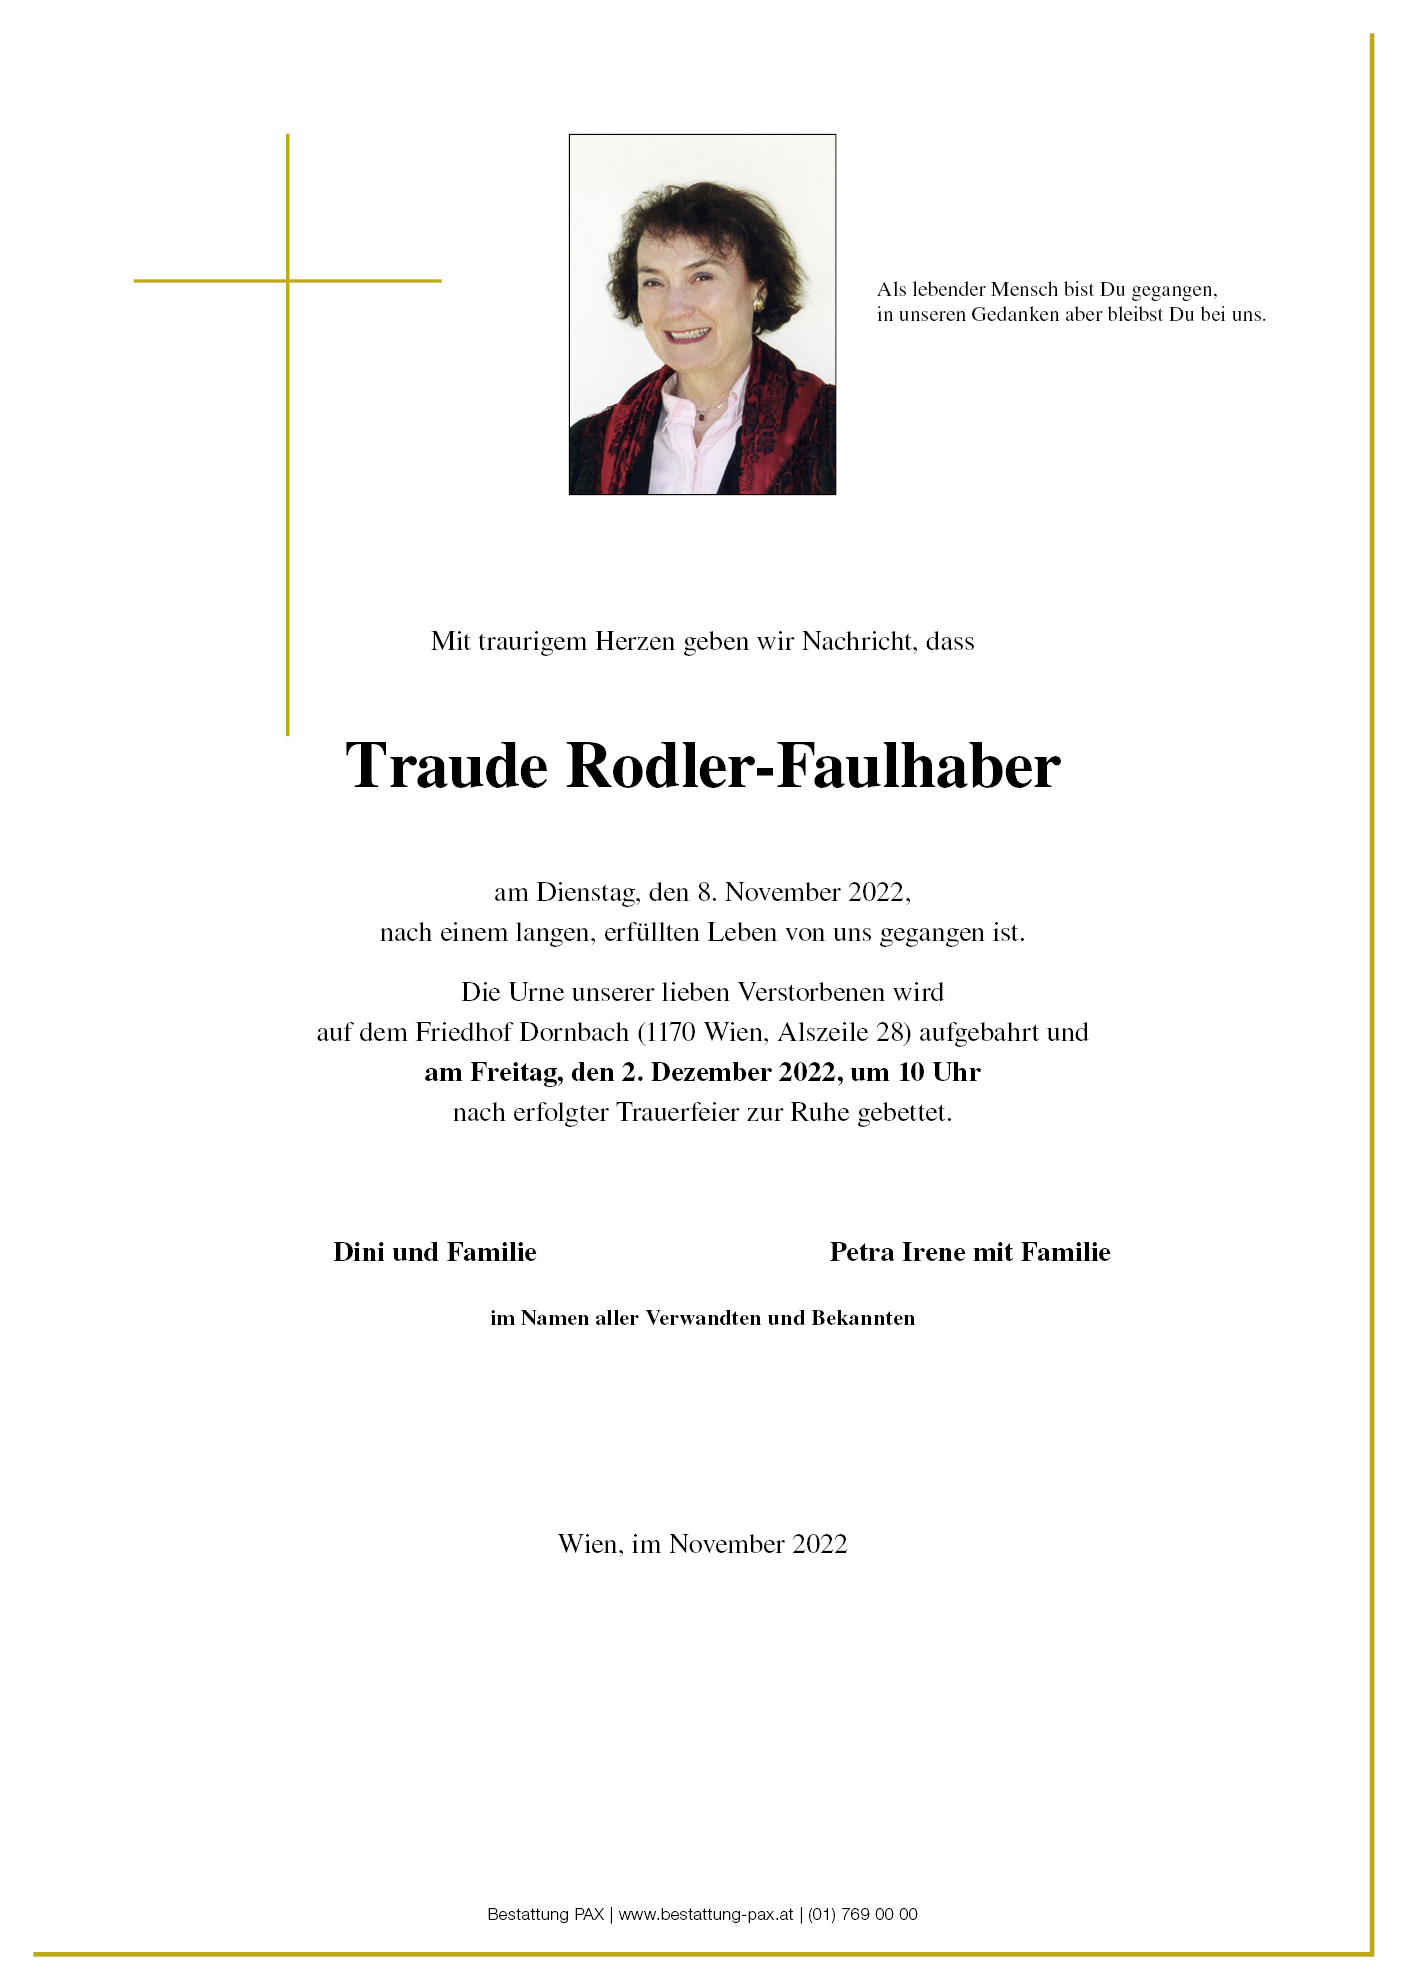 Traude Rodler-Faulhaber